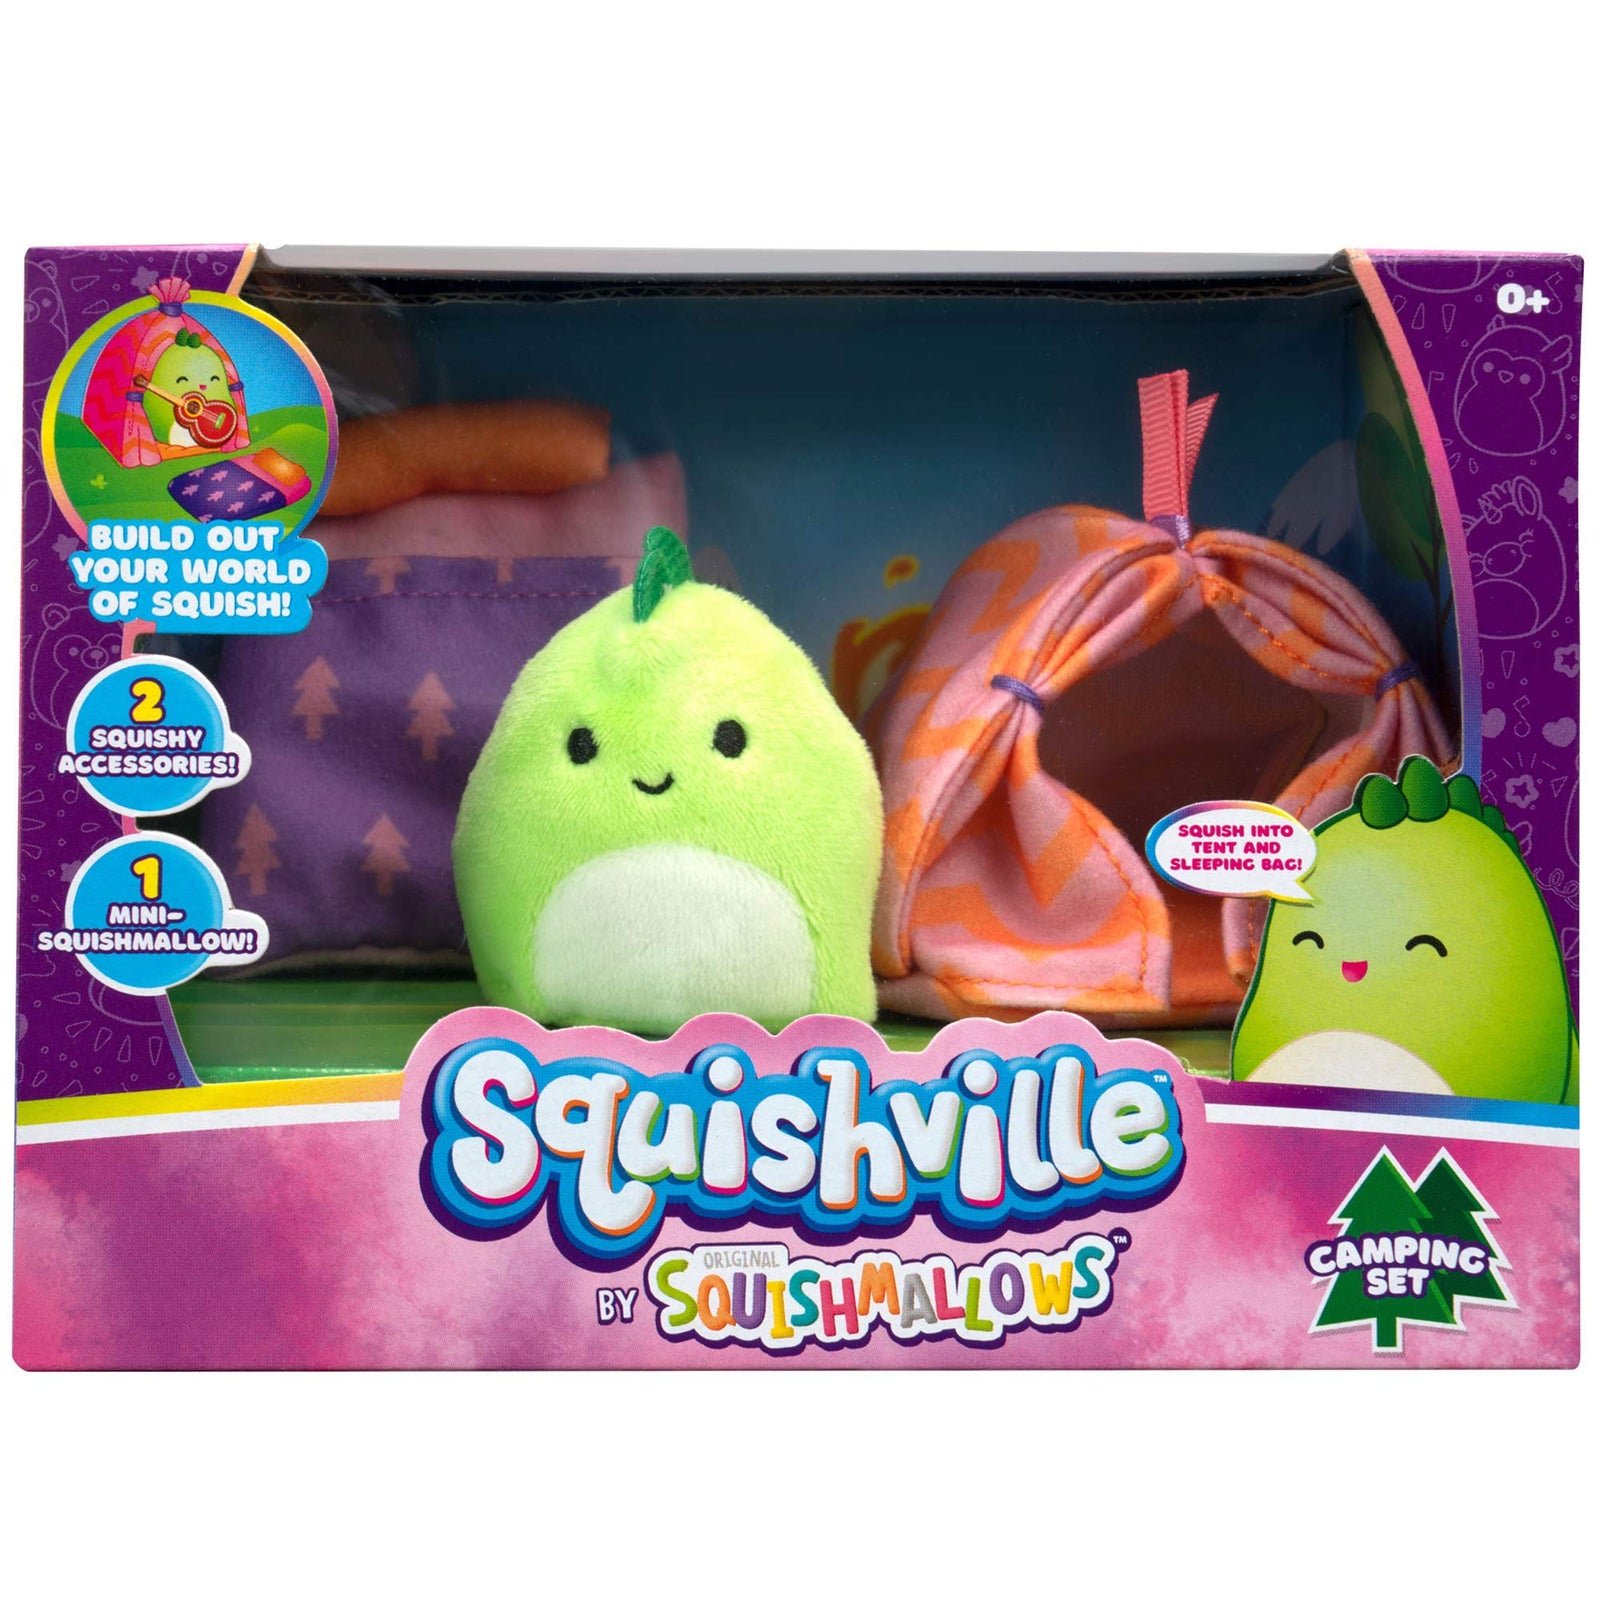 Squishville by Squishmallows Mini Plush Room Accessory Set, Camping, 2” Danny Soft Mini-Squishmallow and 2 Plush Accessories, Marshmallow-Soft Animals, Camping Toys